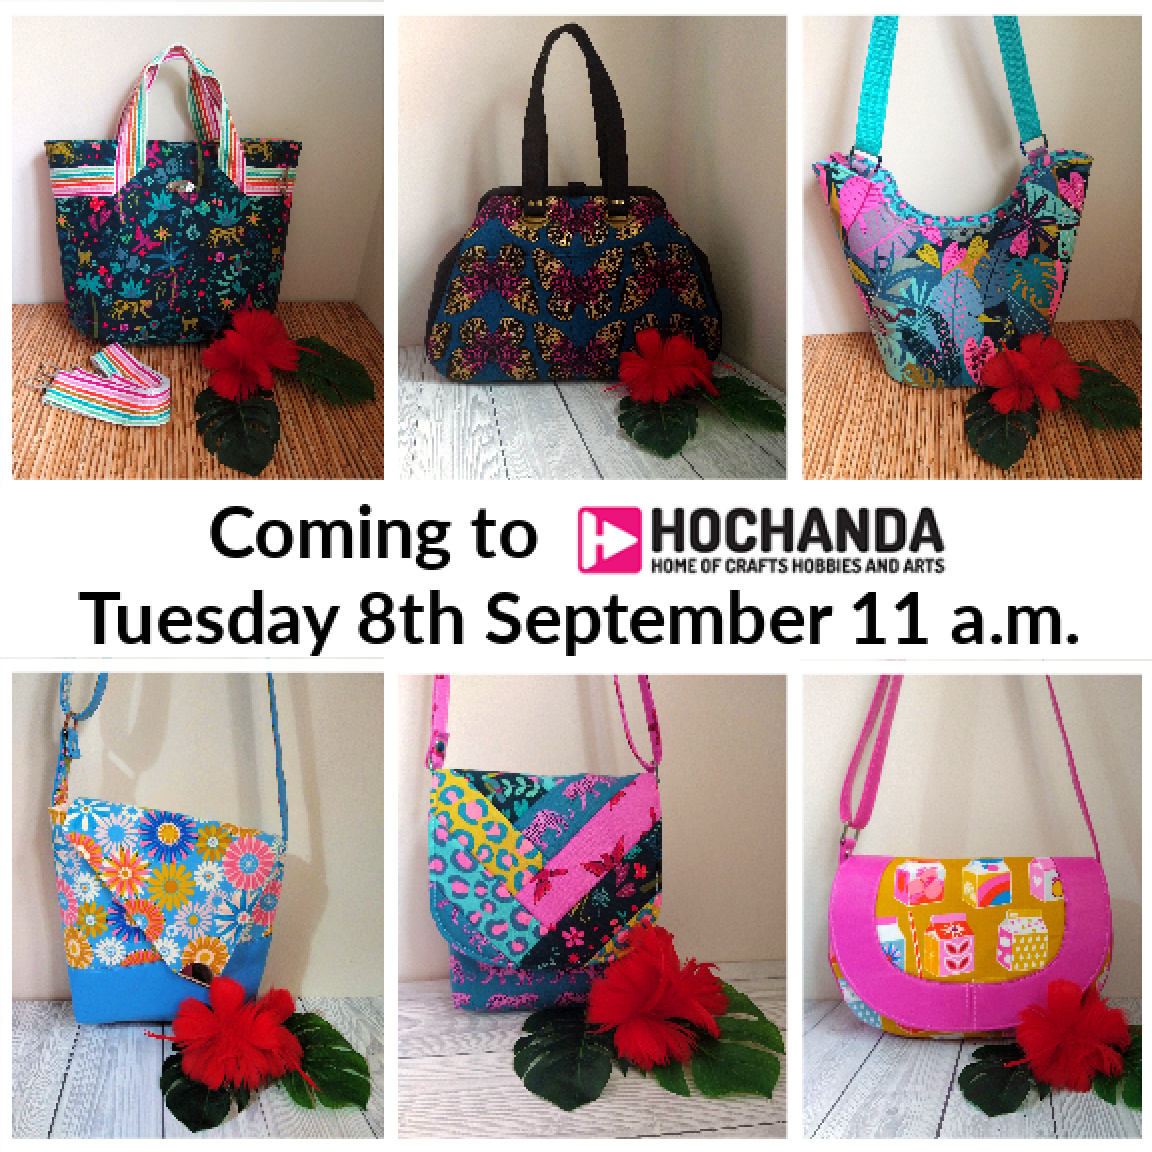 Sewing Patterns by Mrs H on Hochanda TV